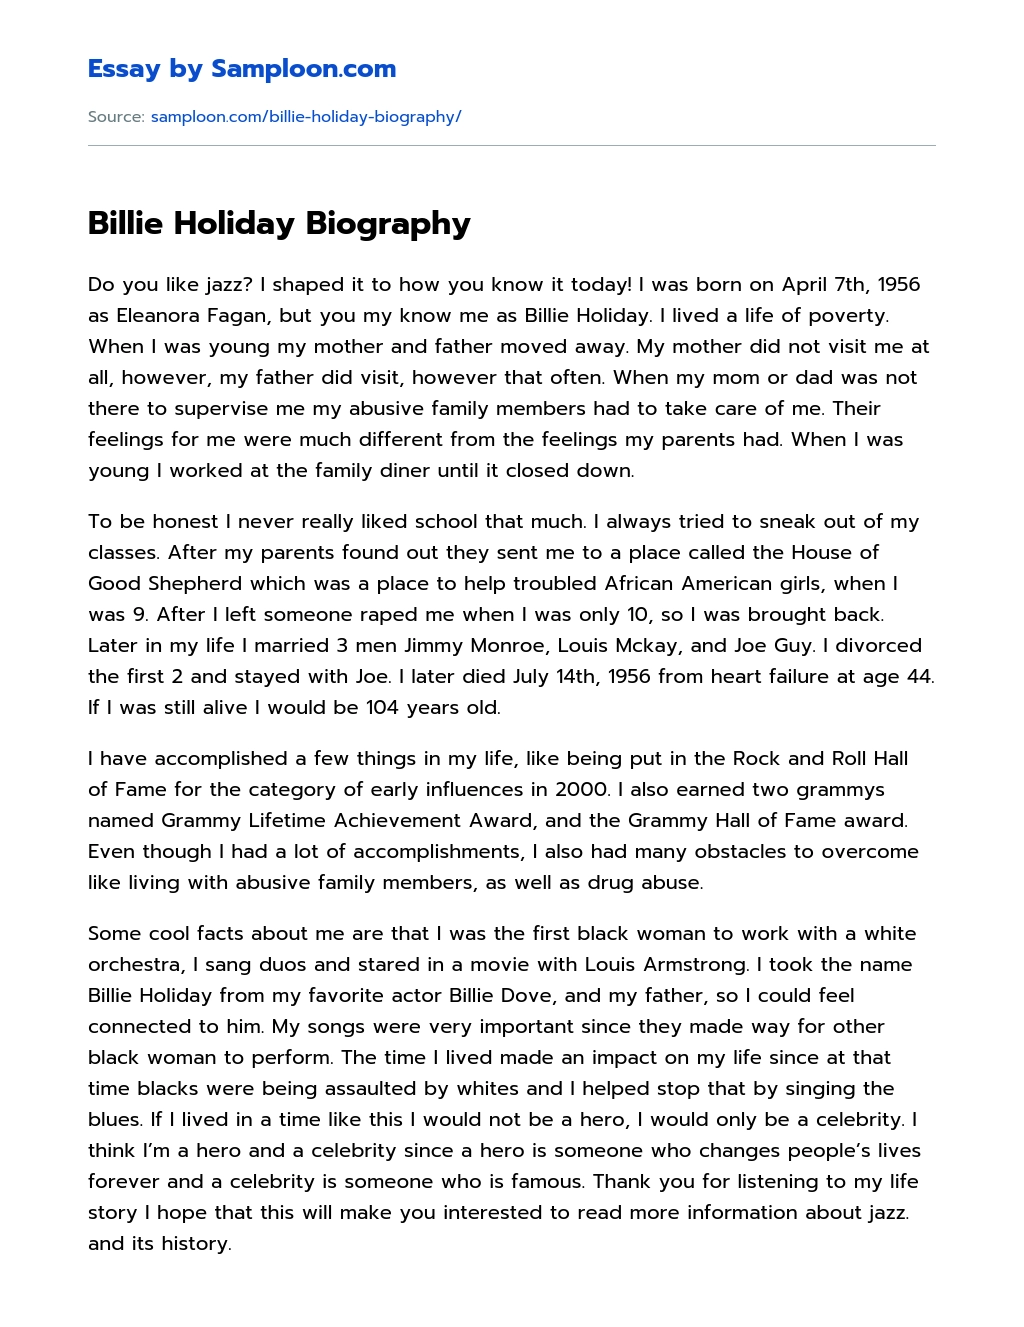 Billie Holiday Biography essay